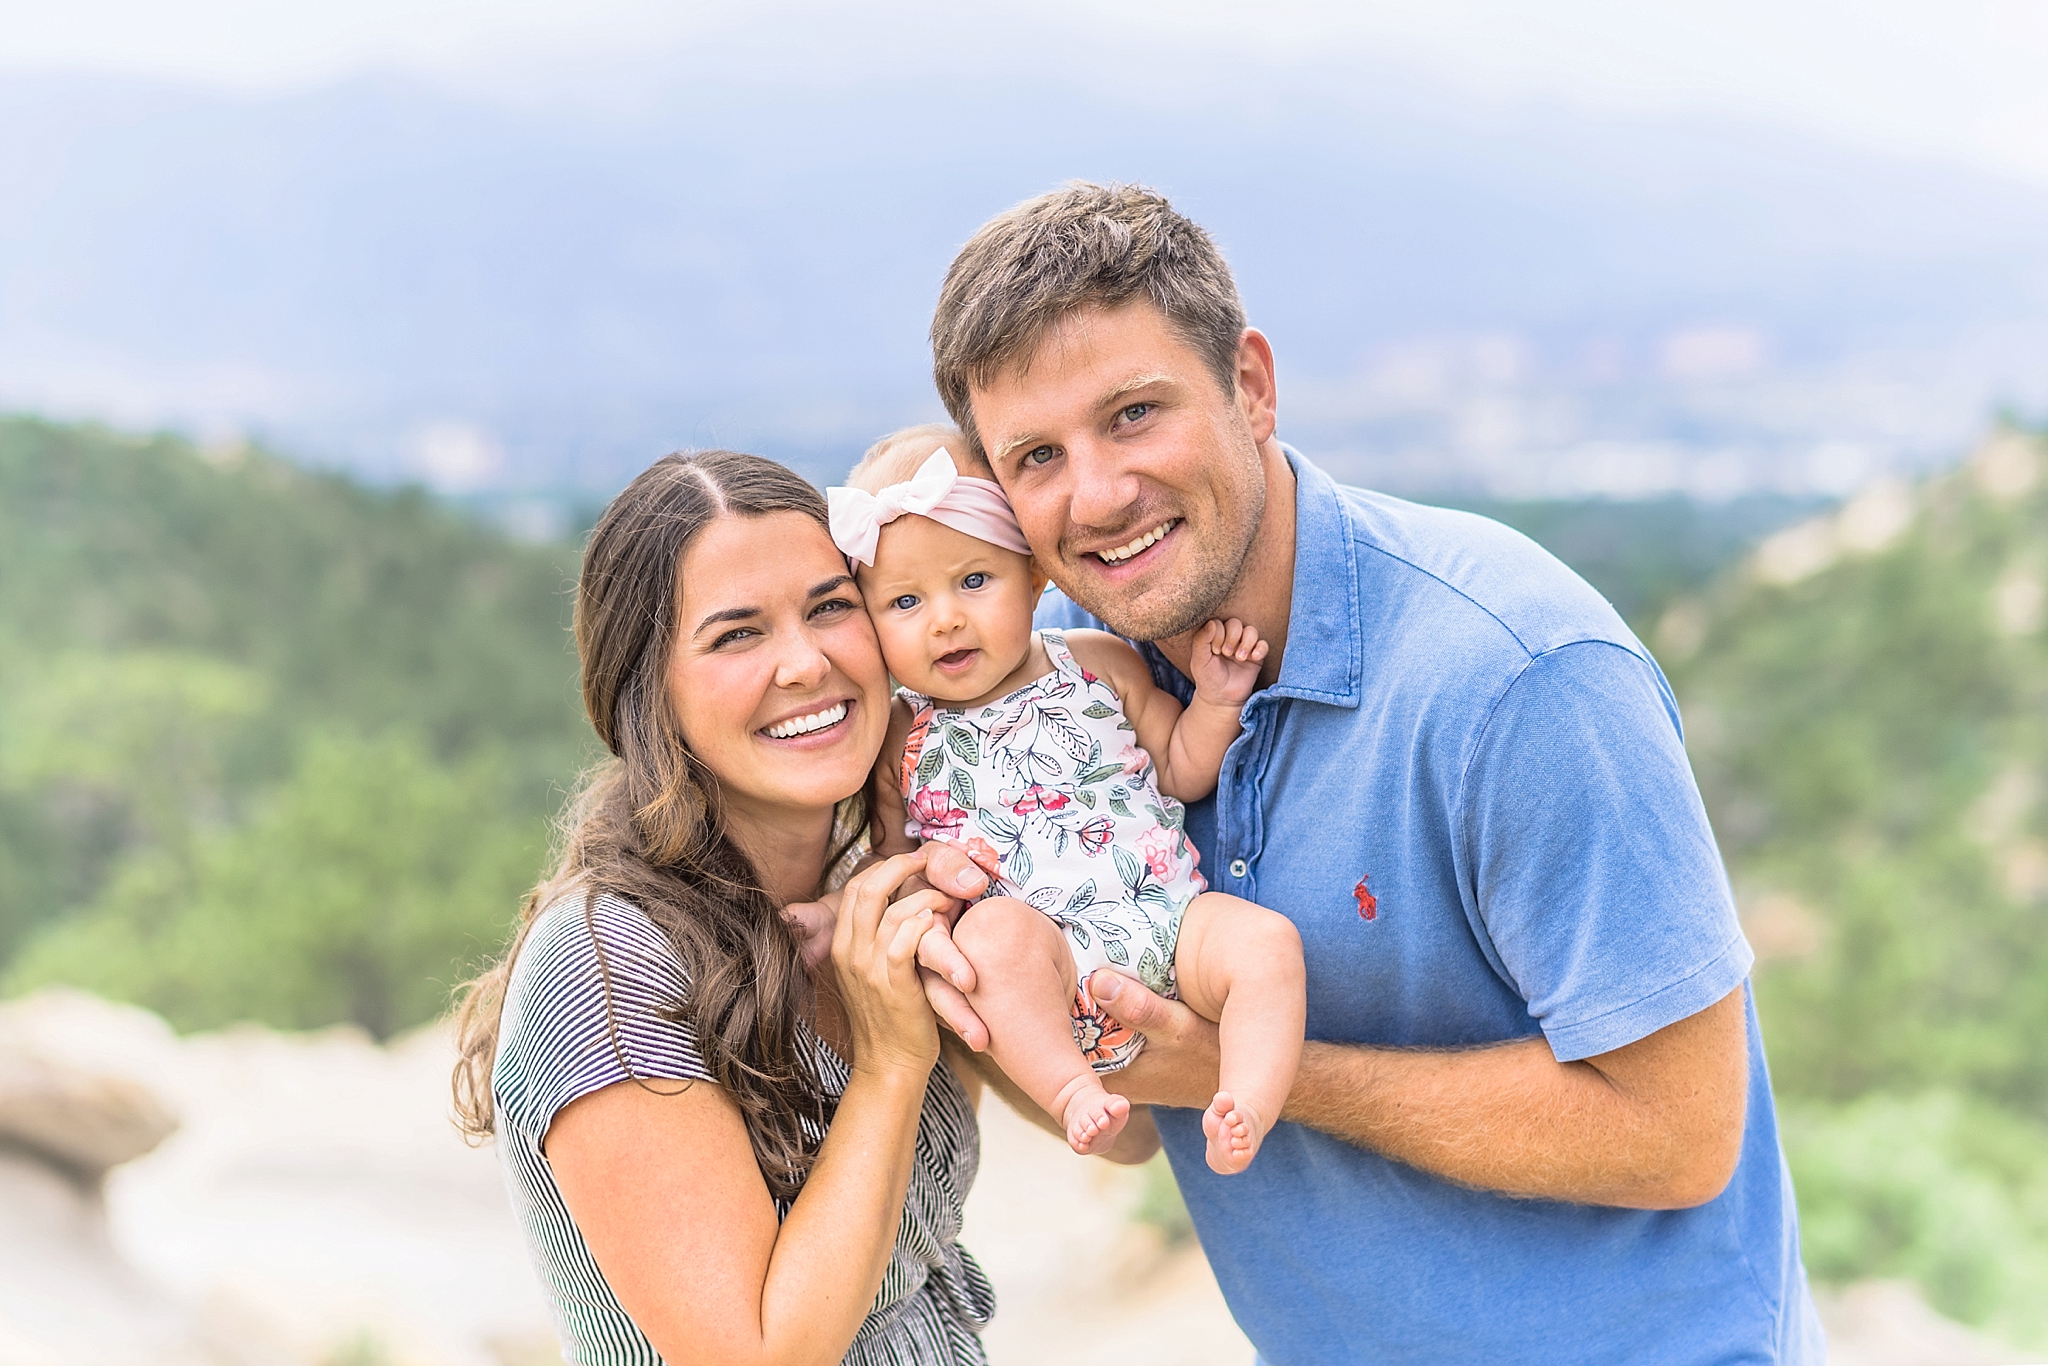 Andrew & Caitlin | Palmar Park, Colorado Springs Family Photographer